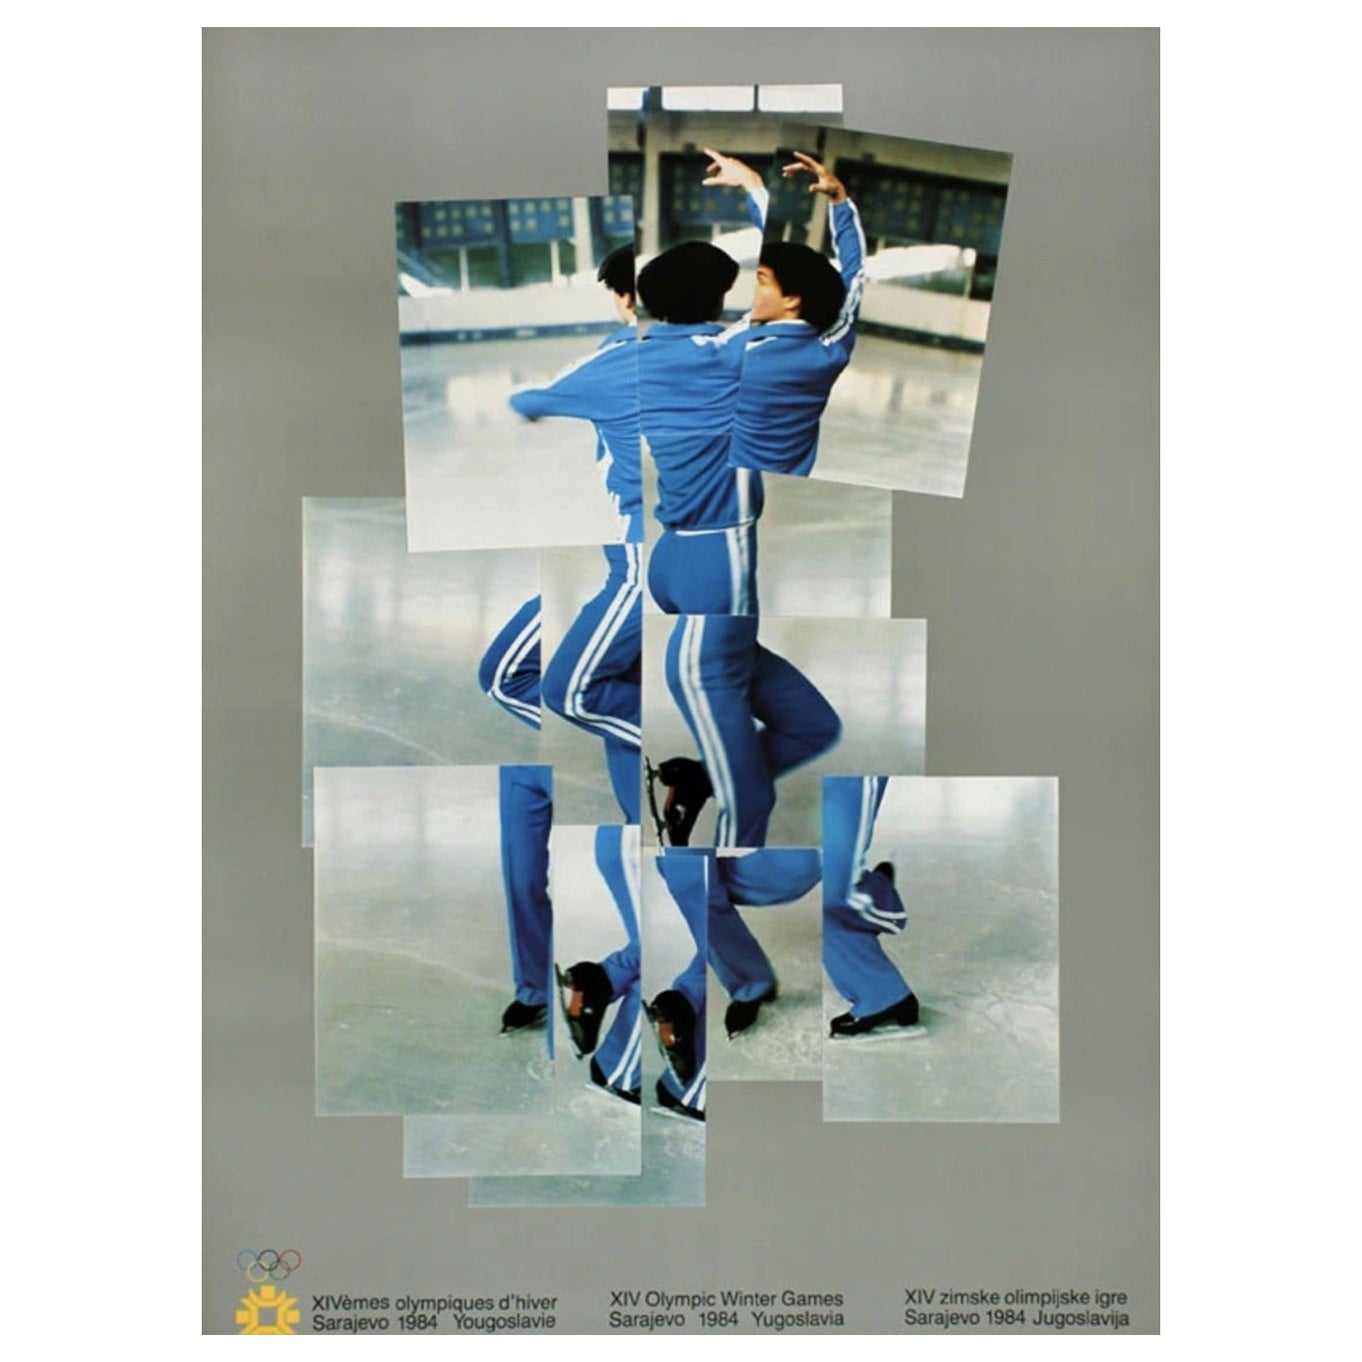 1984 Sarajevo Winter Olympic Games - David Hockney Original Vintage Poster